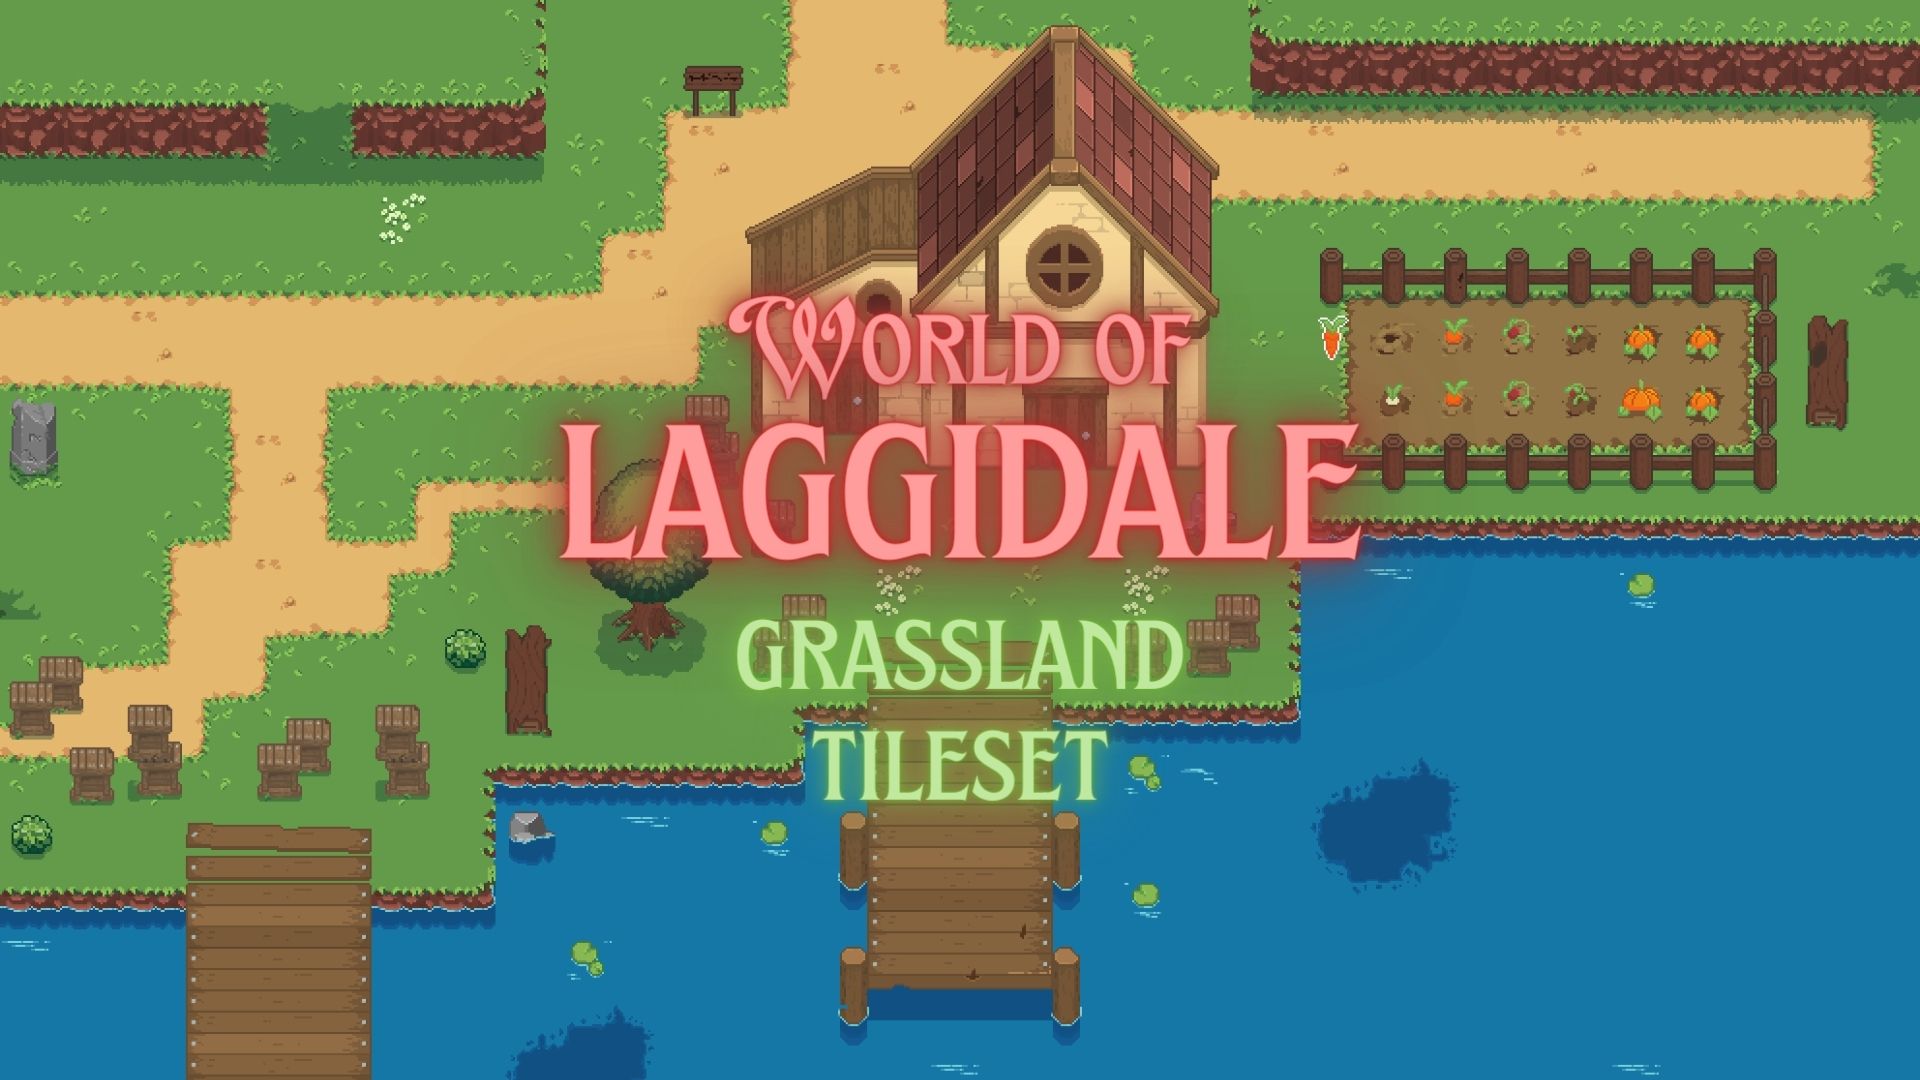 The World of Laggidale: Grassland Tileset